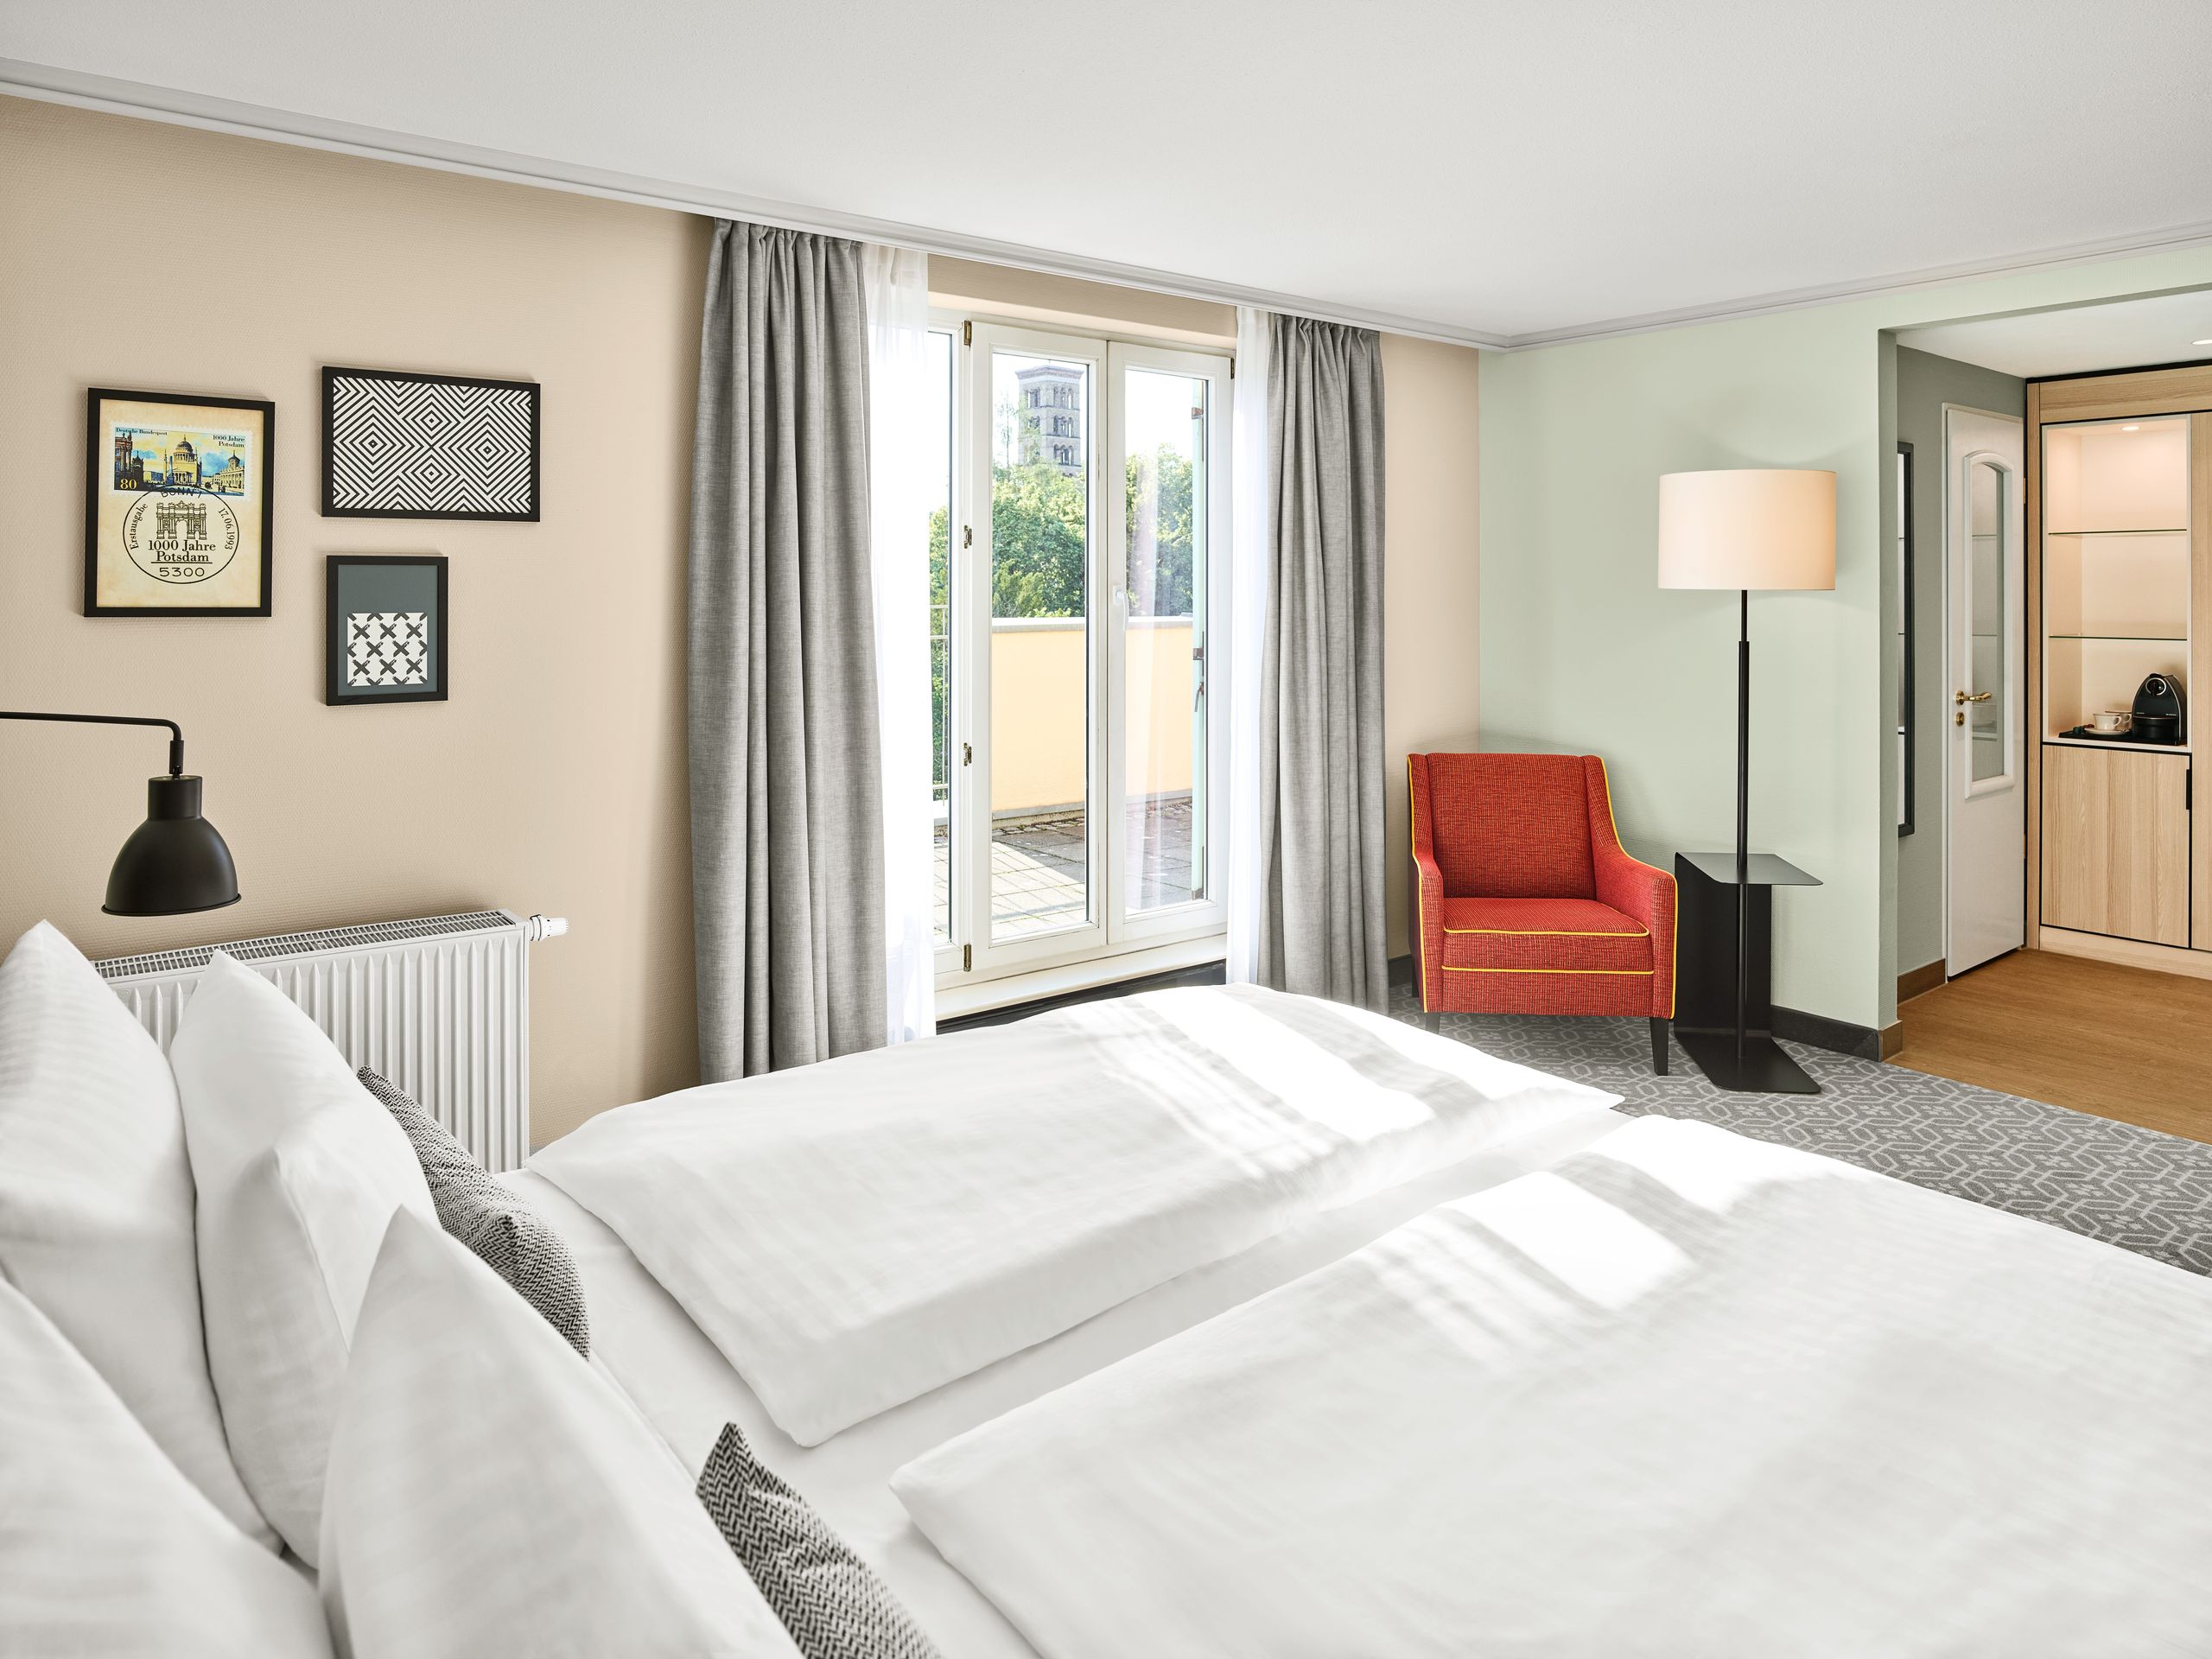 MAXX Hotel Sanssouci Potsdam - Tyskland - Deluxe-værelse